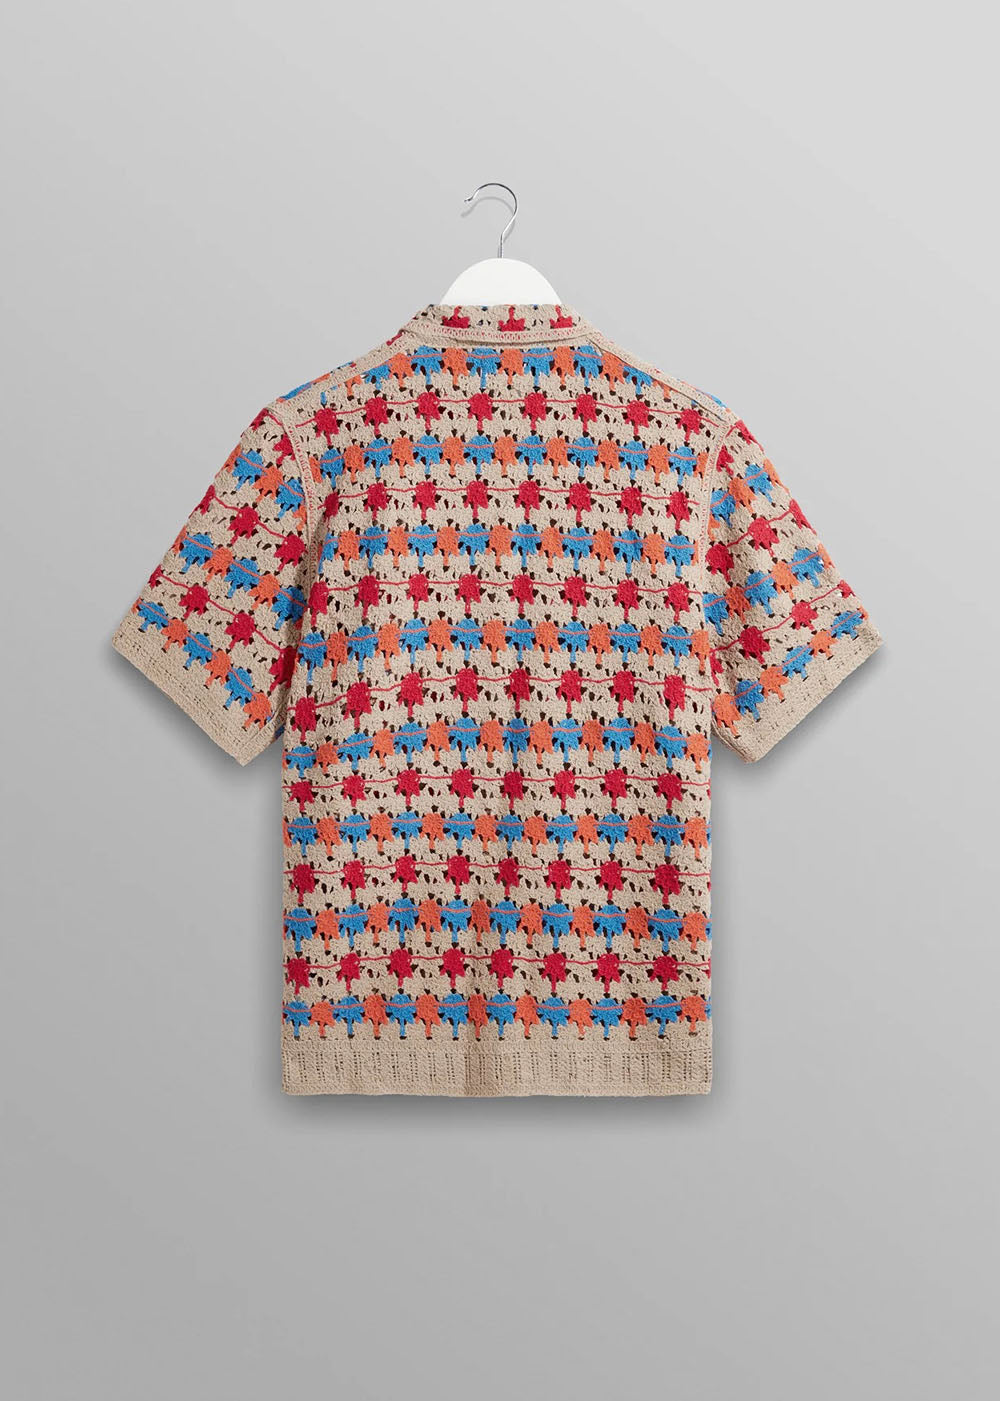 Porto Shirt Splash Crochet - Multi Colored - Wax London Canada - Danali